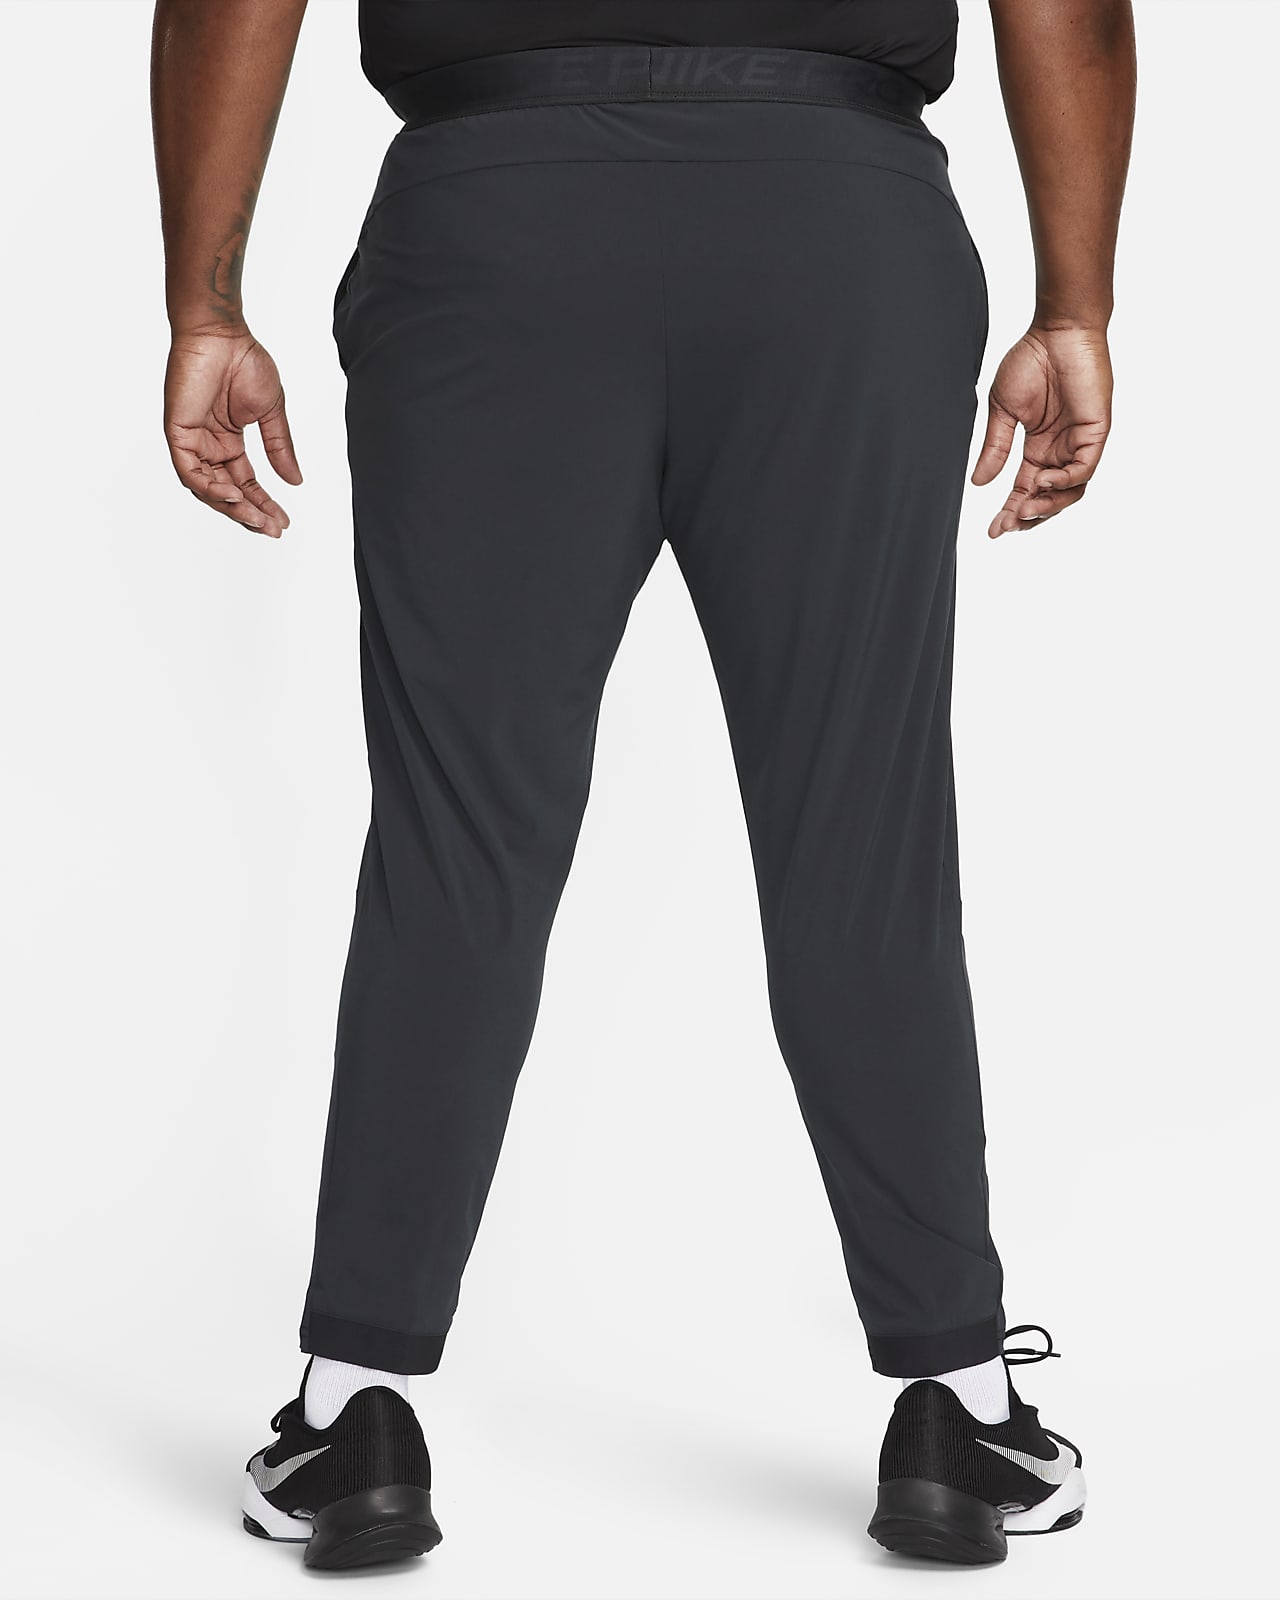 Nike Joggers, Nike Pro Track Pants, Nike Fleece Joggers